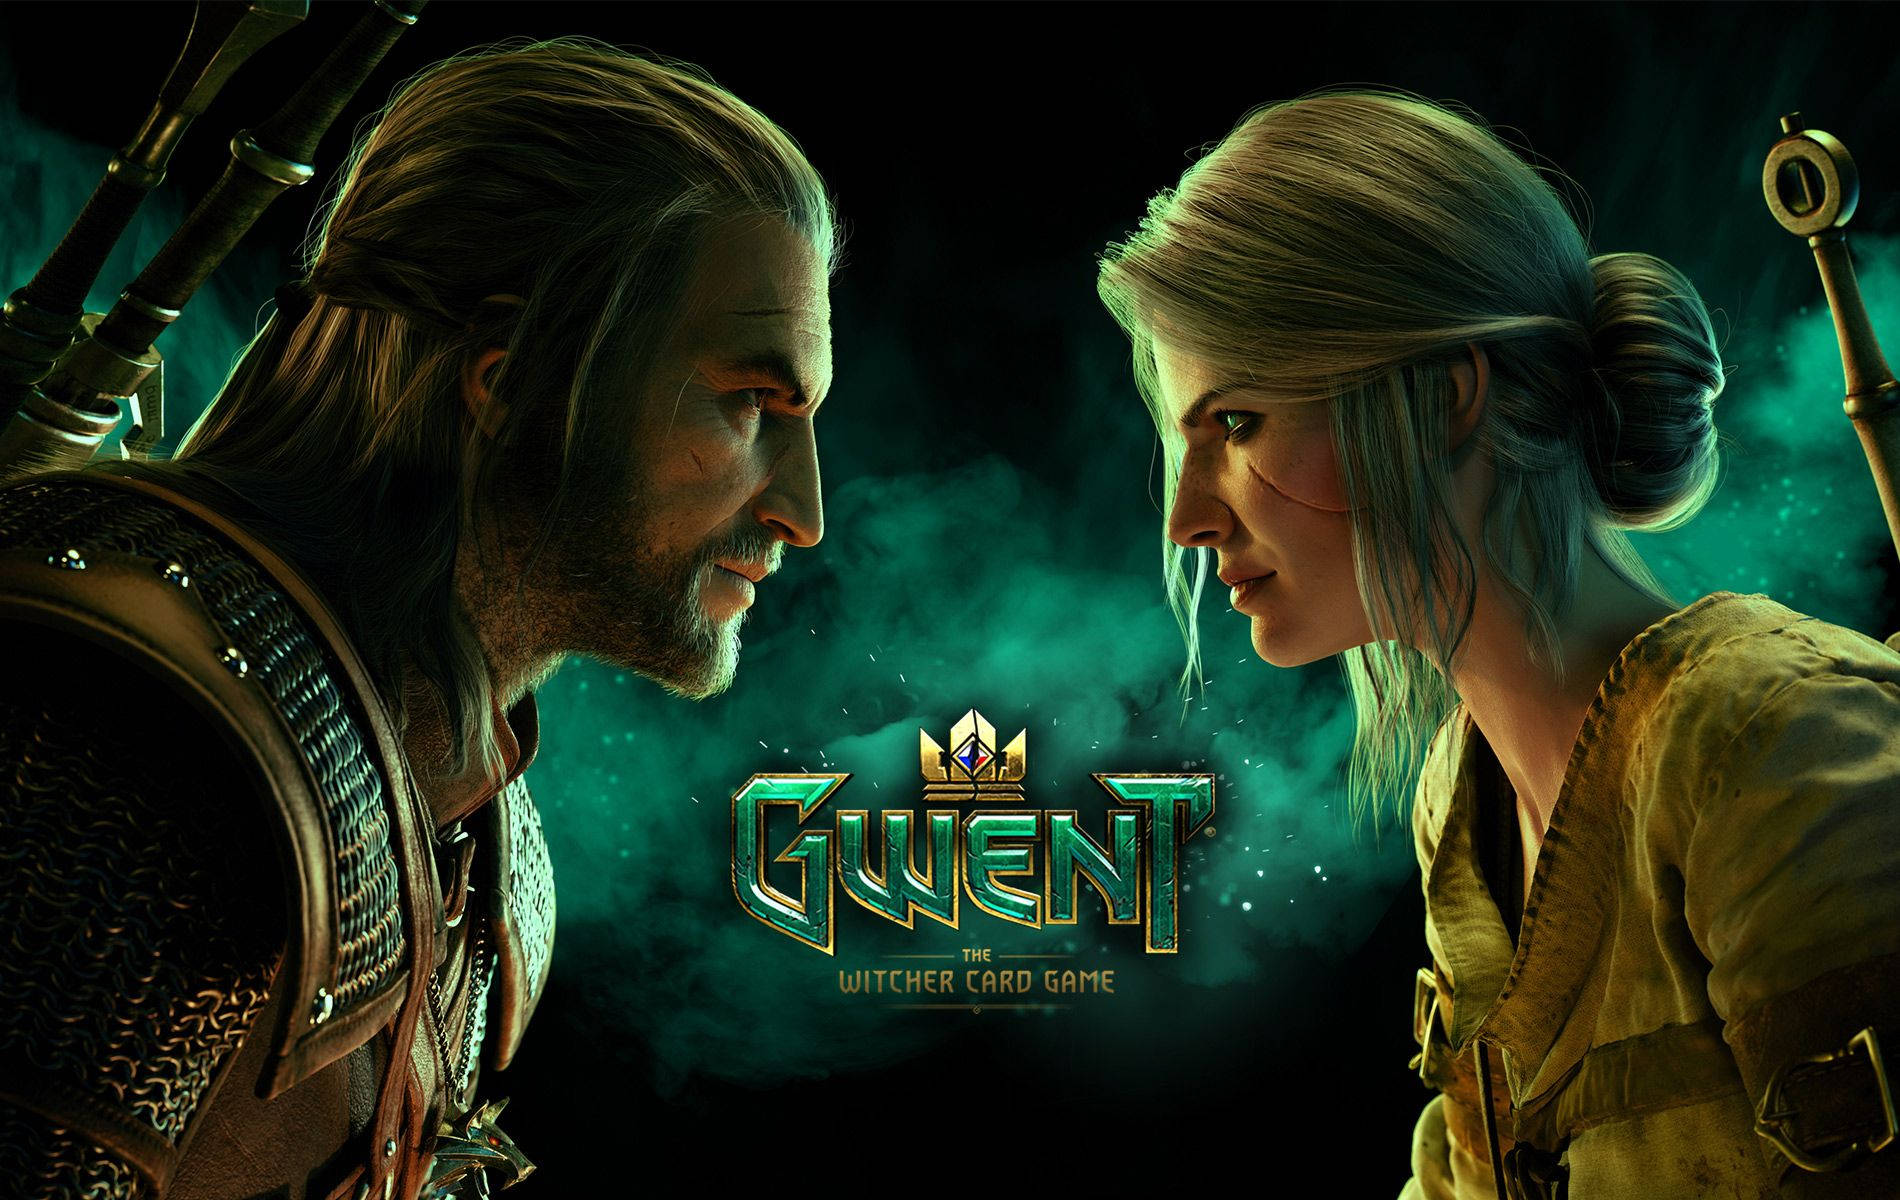 The Witcher Geralt And Ciri Poster Wallpaper